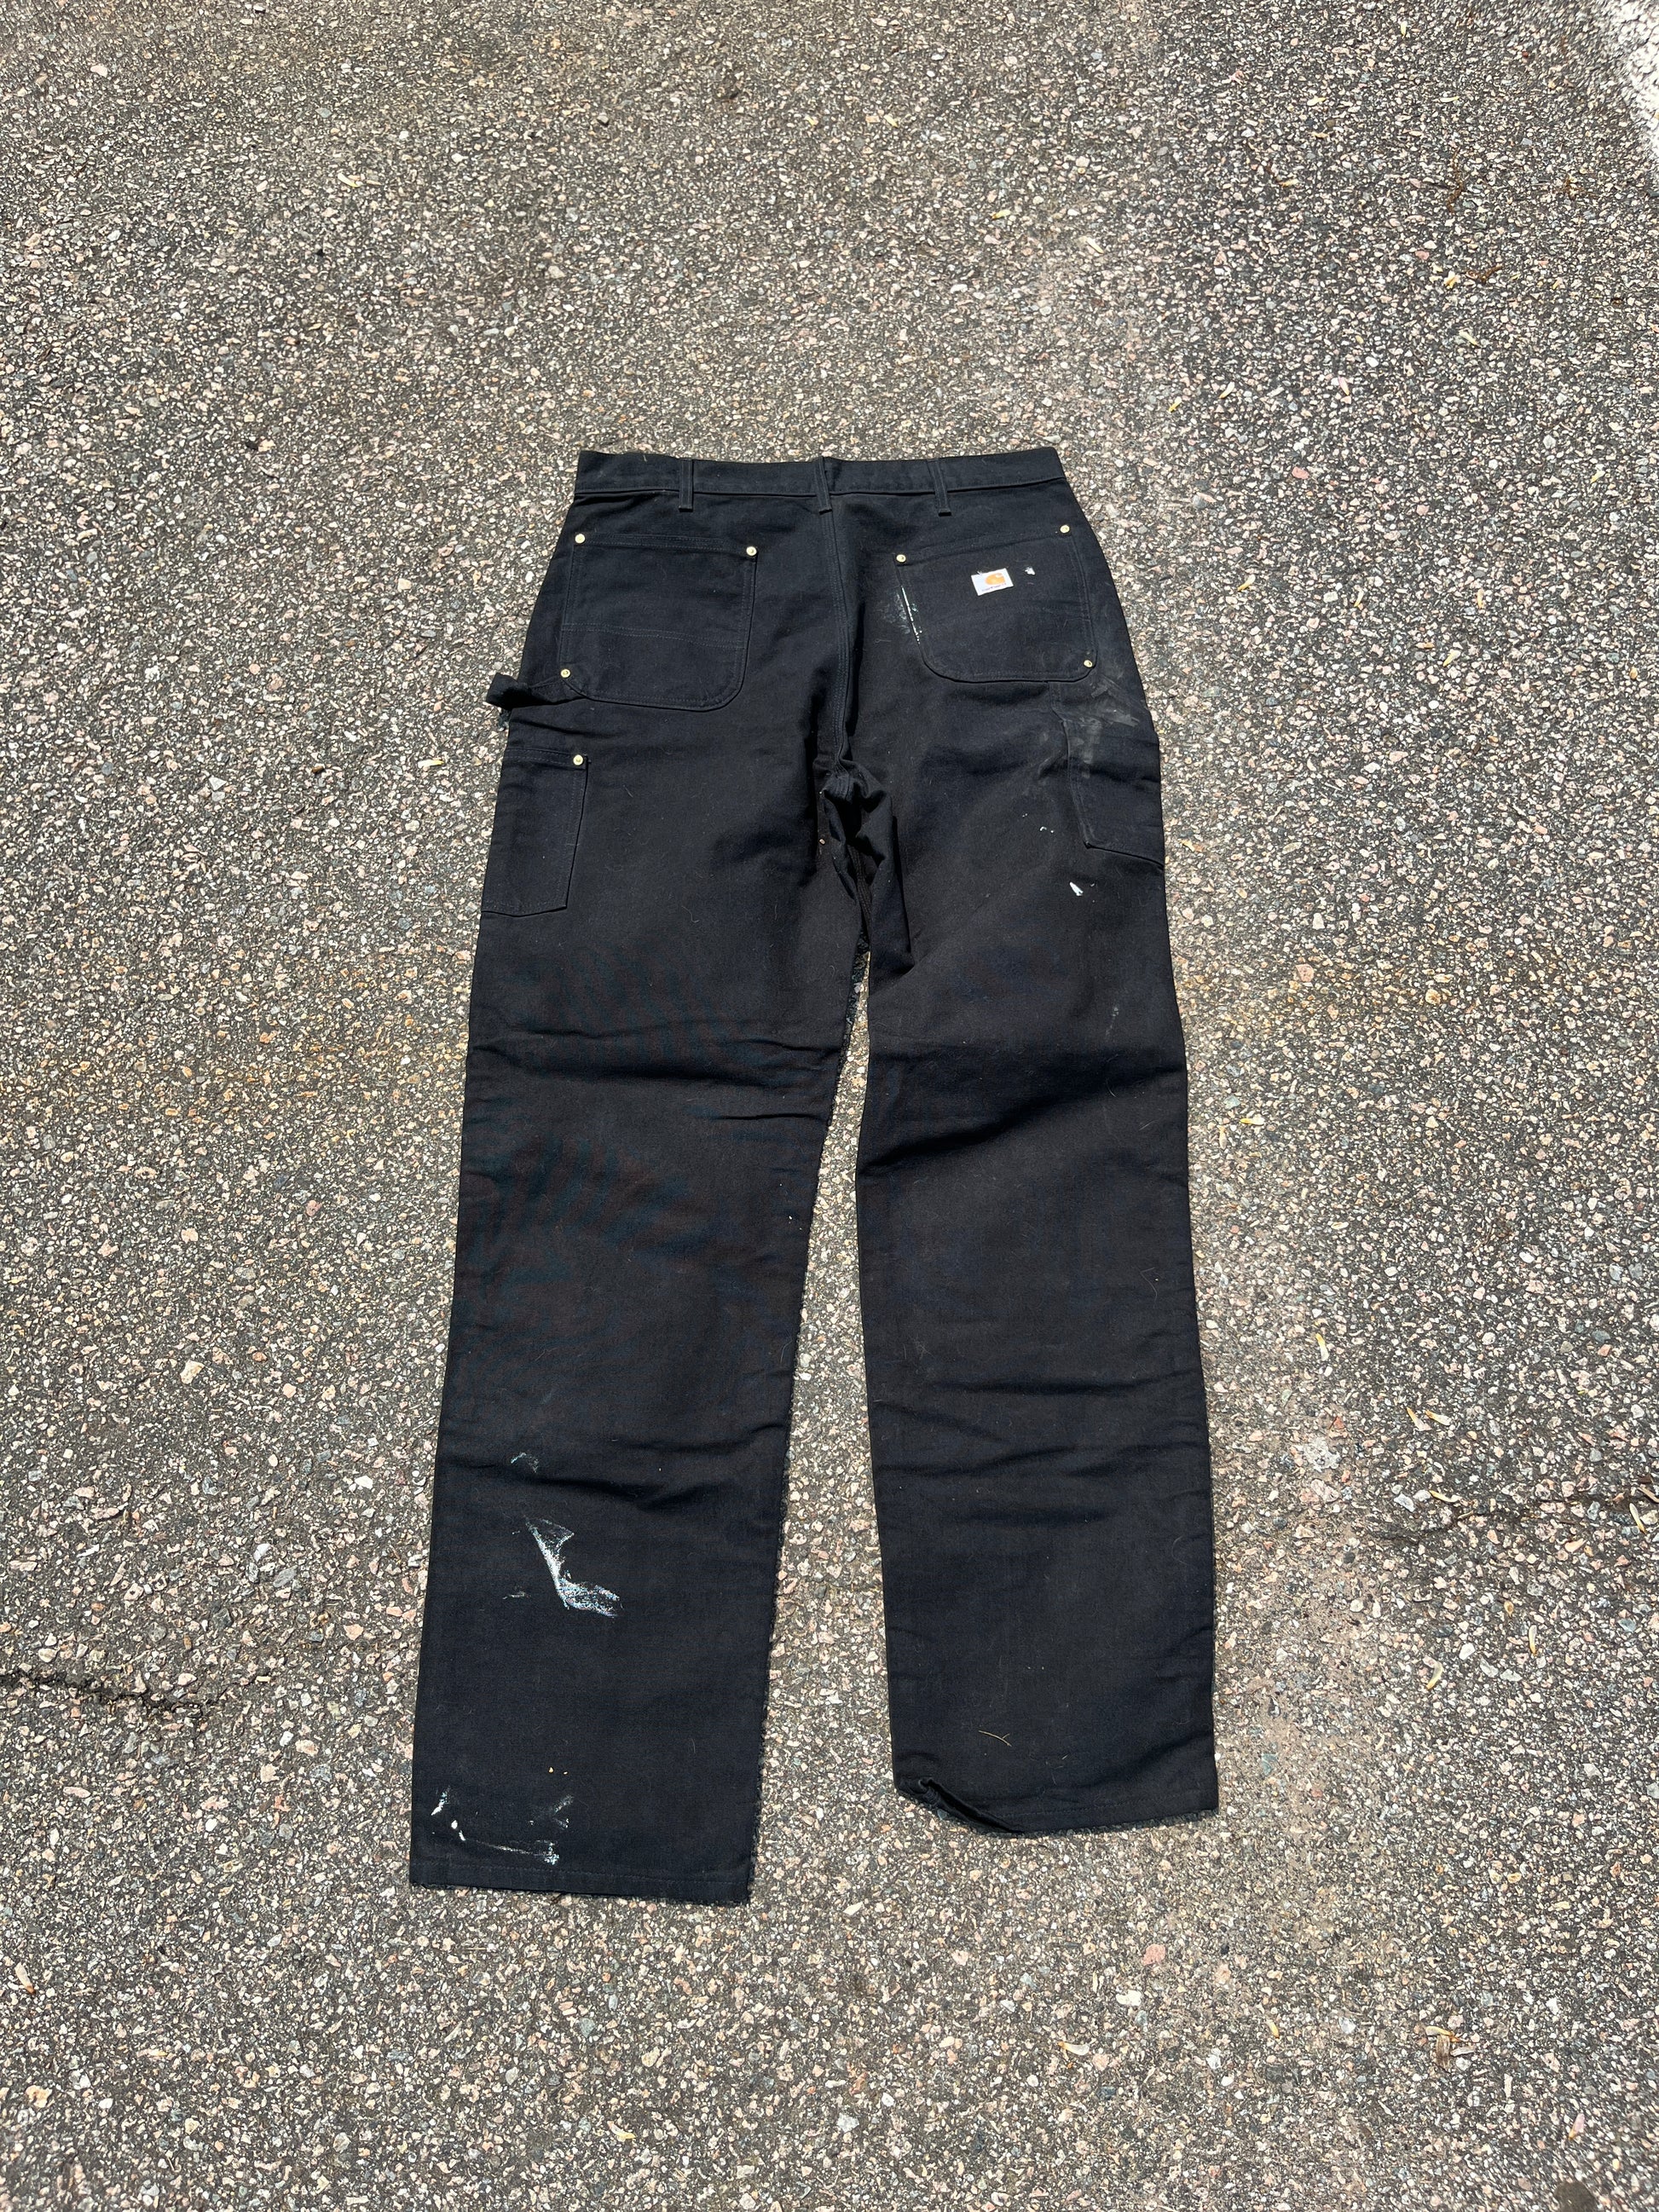 Painted Black Carhartt Double Knee Pants - 36 x 34